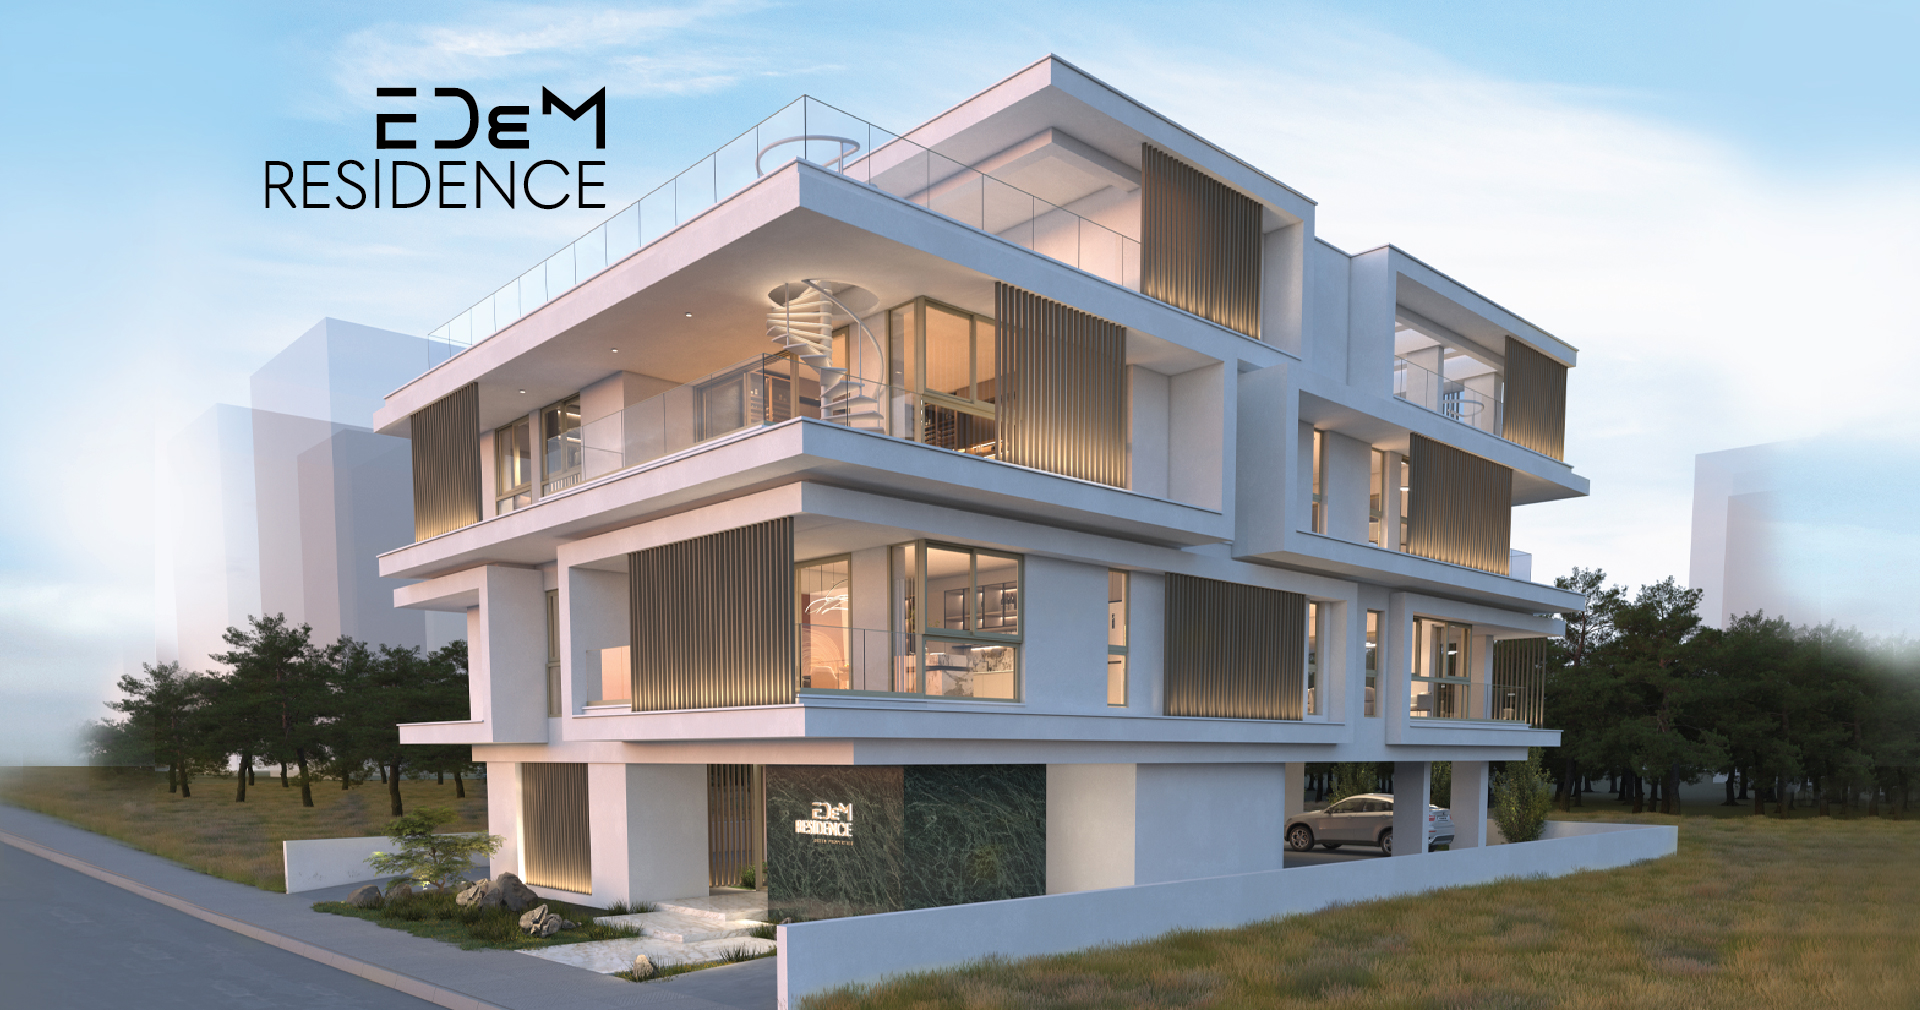 edem-residence
